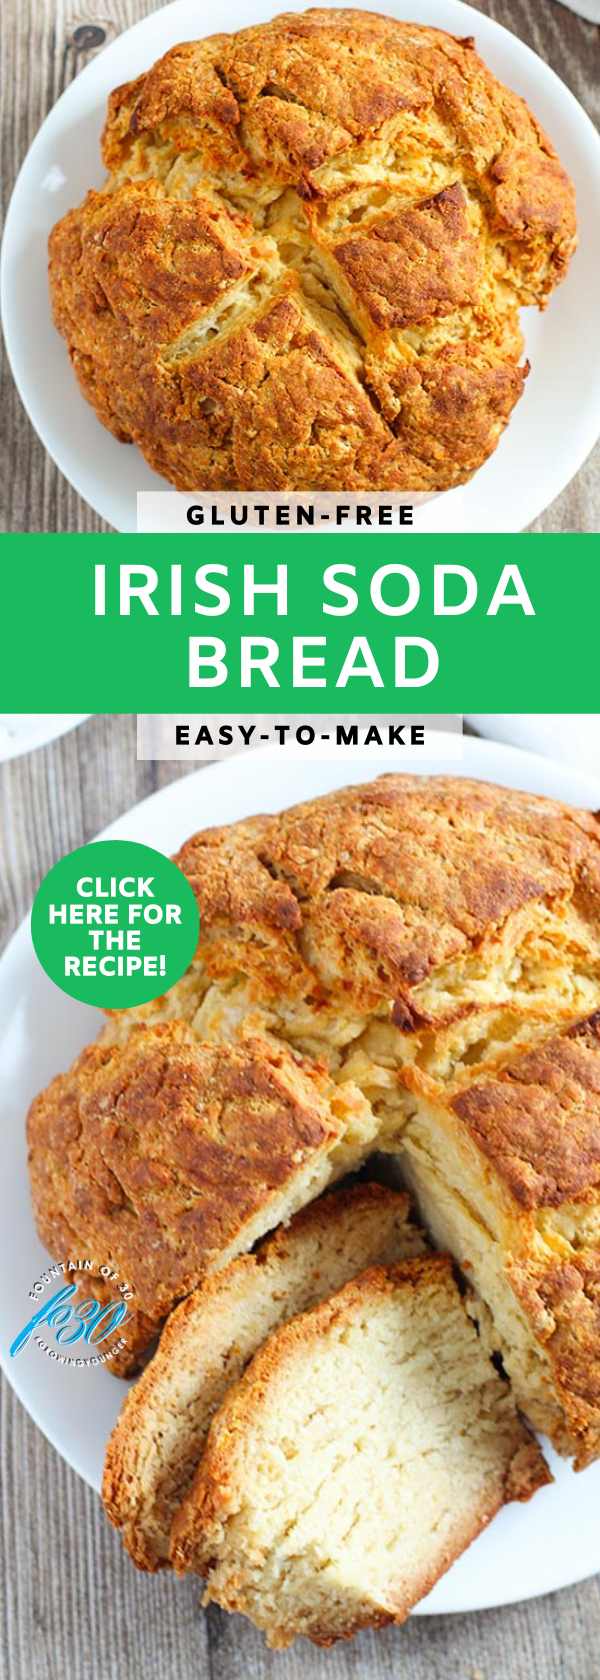 St. Patrick's Day Irish soda bread fountainof30